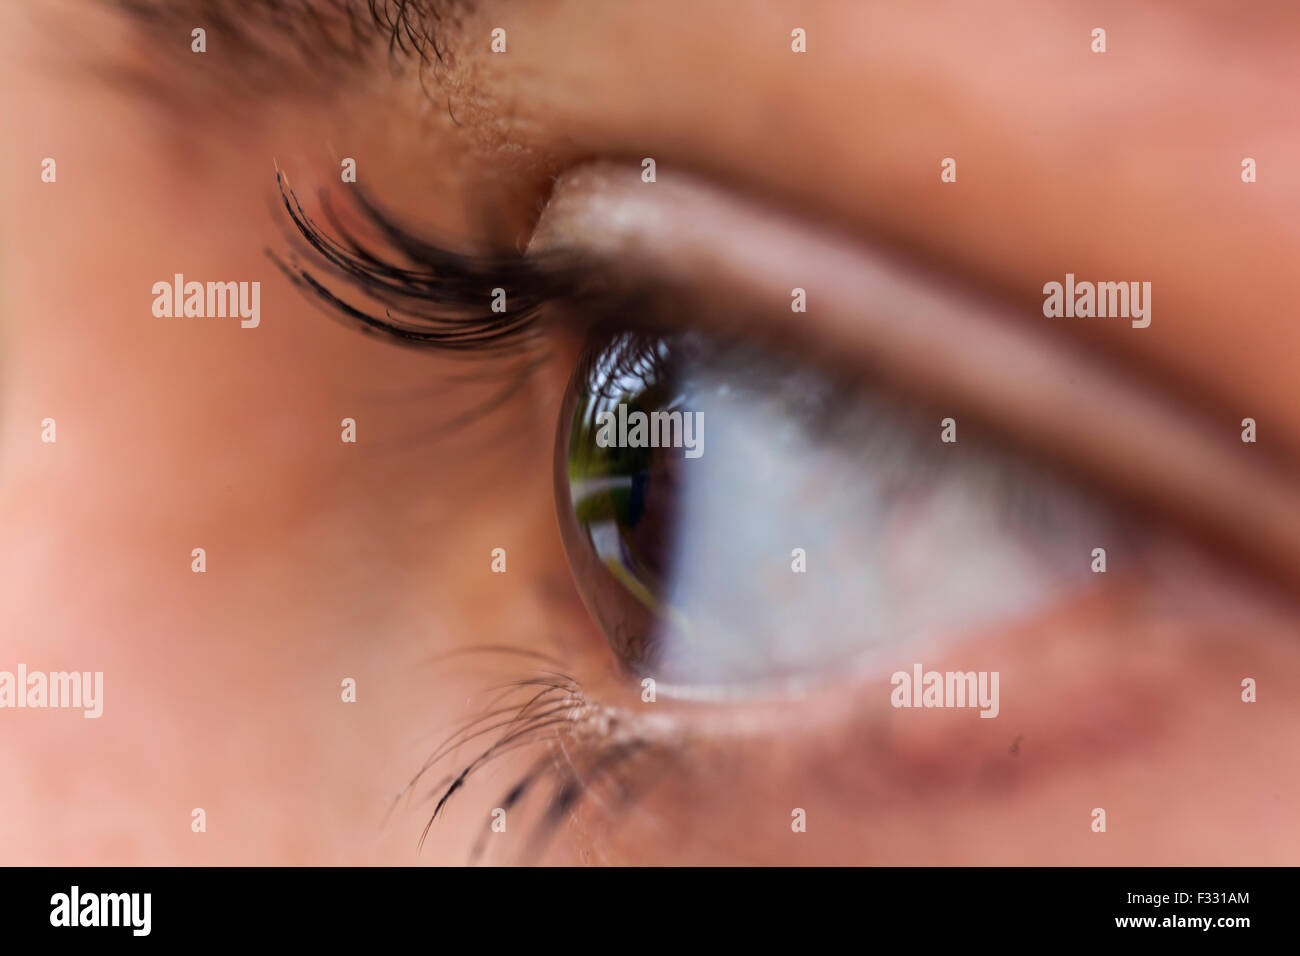 Human eye close up Stock Photo